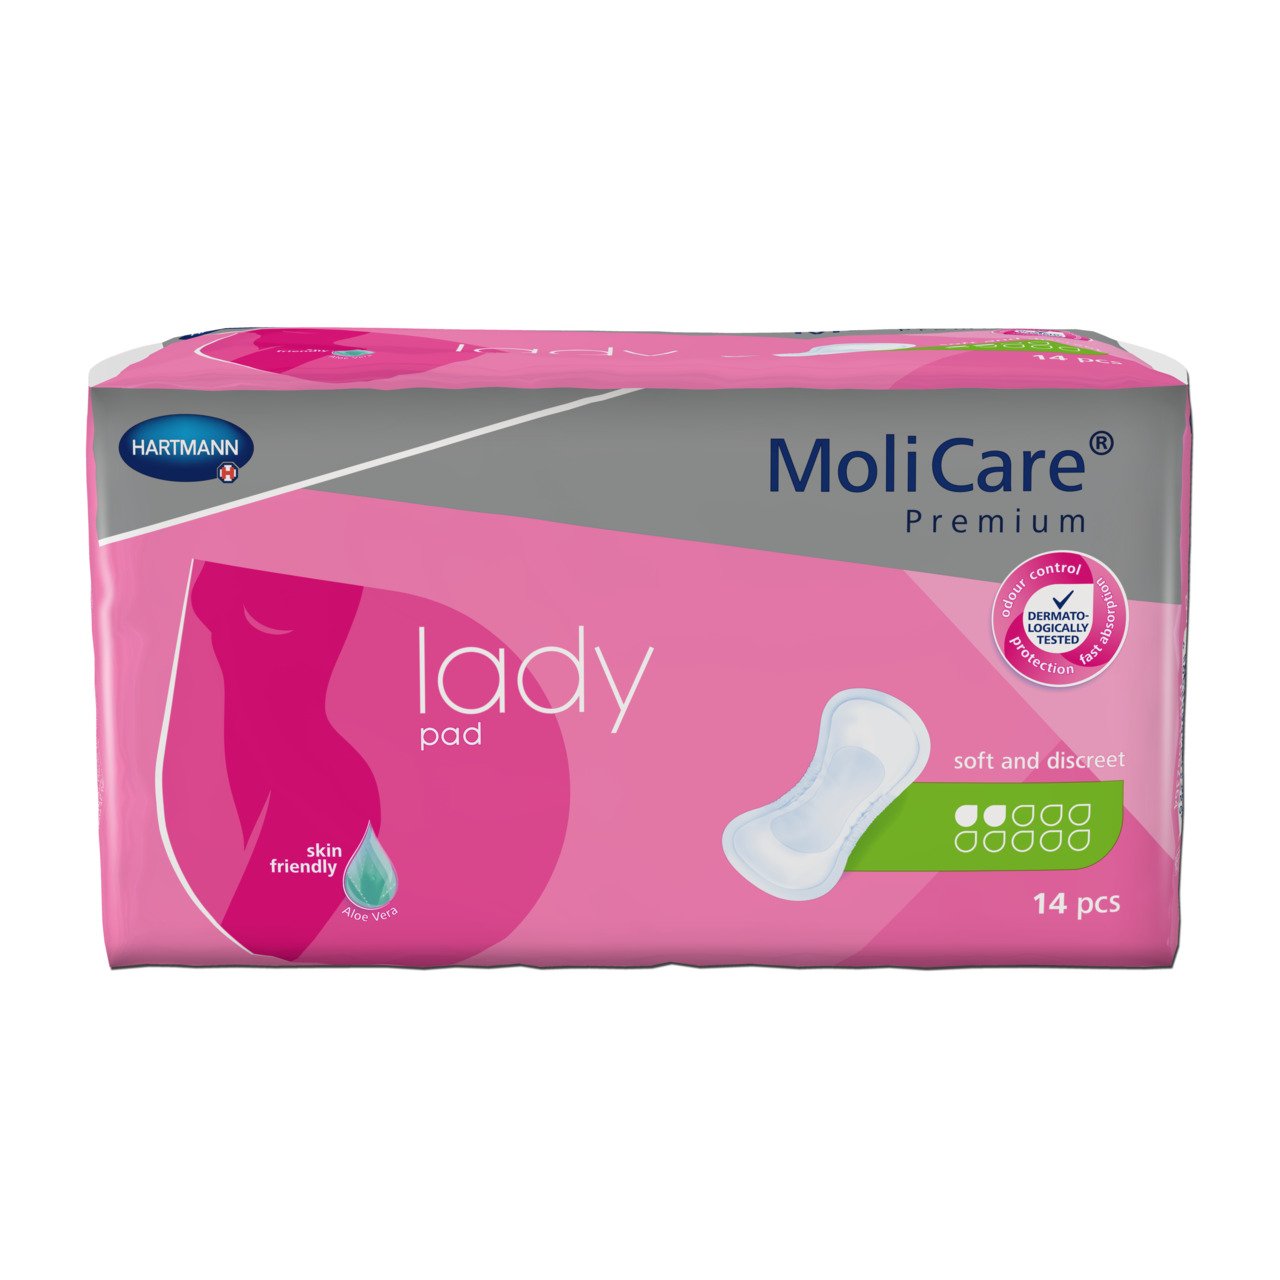 MoliCare Premium Lady Pad 2 drops 252